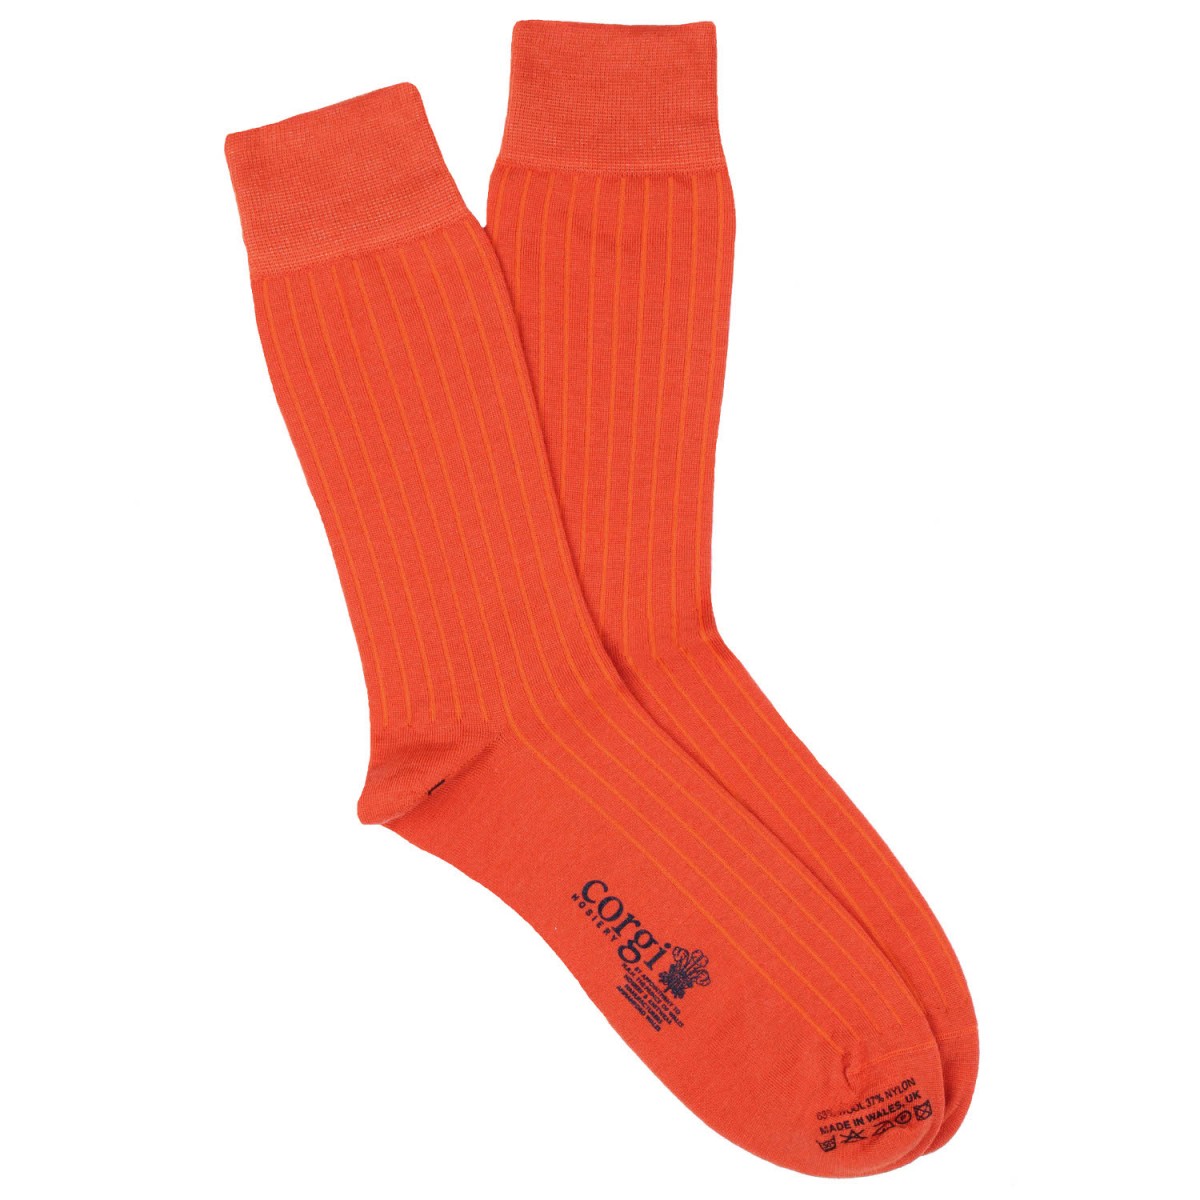 Corgi Socks Wool Rib Orange